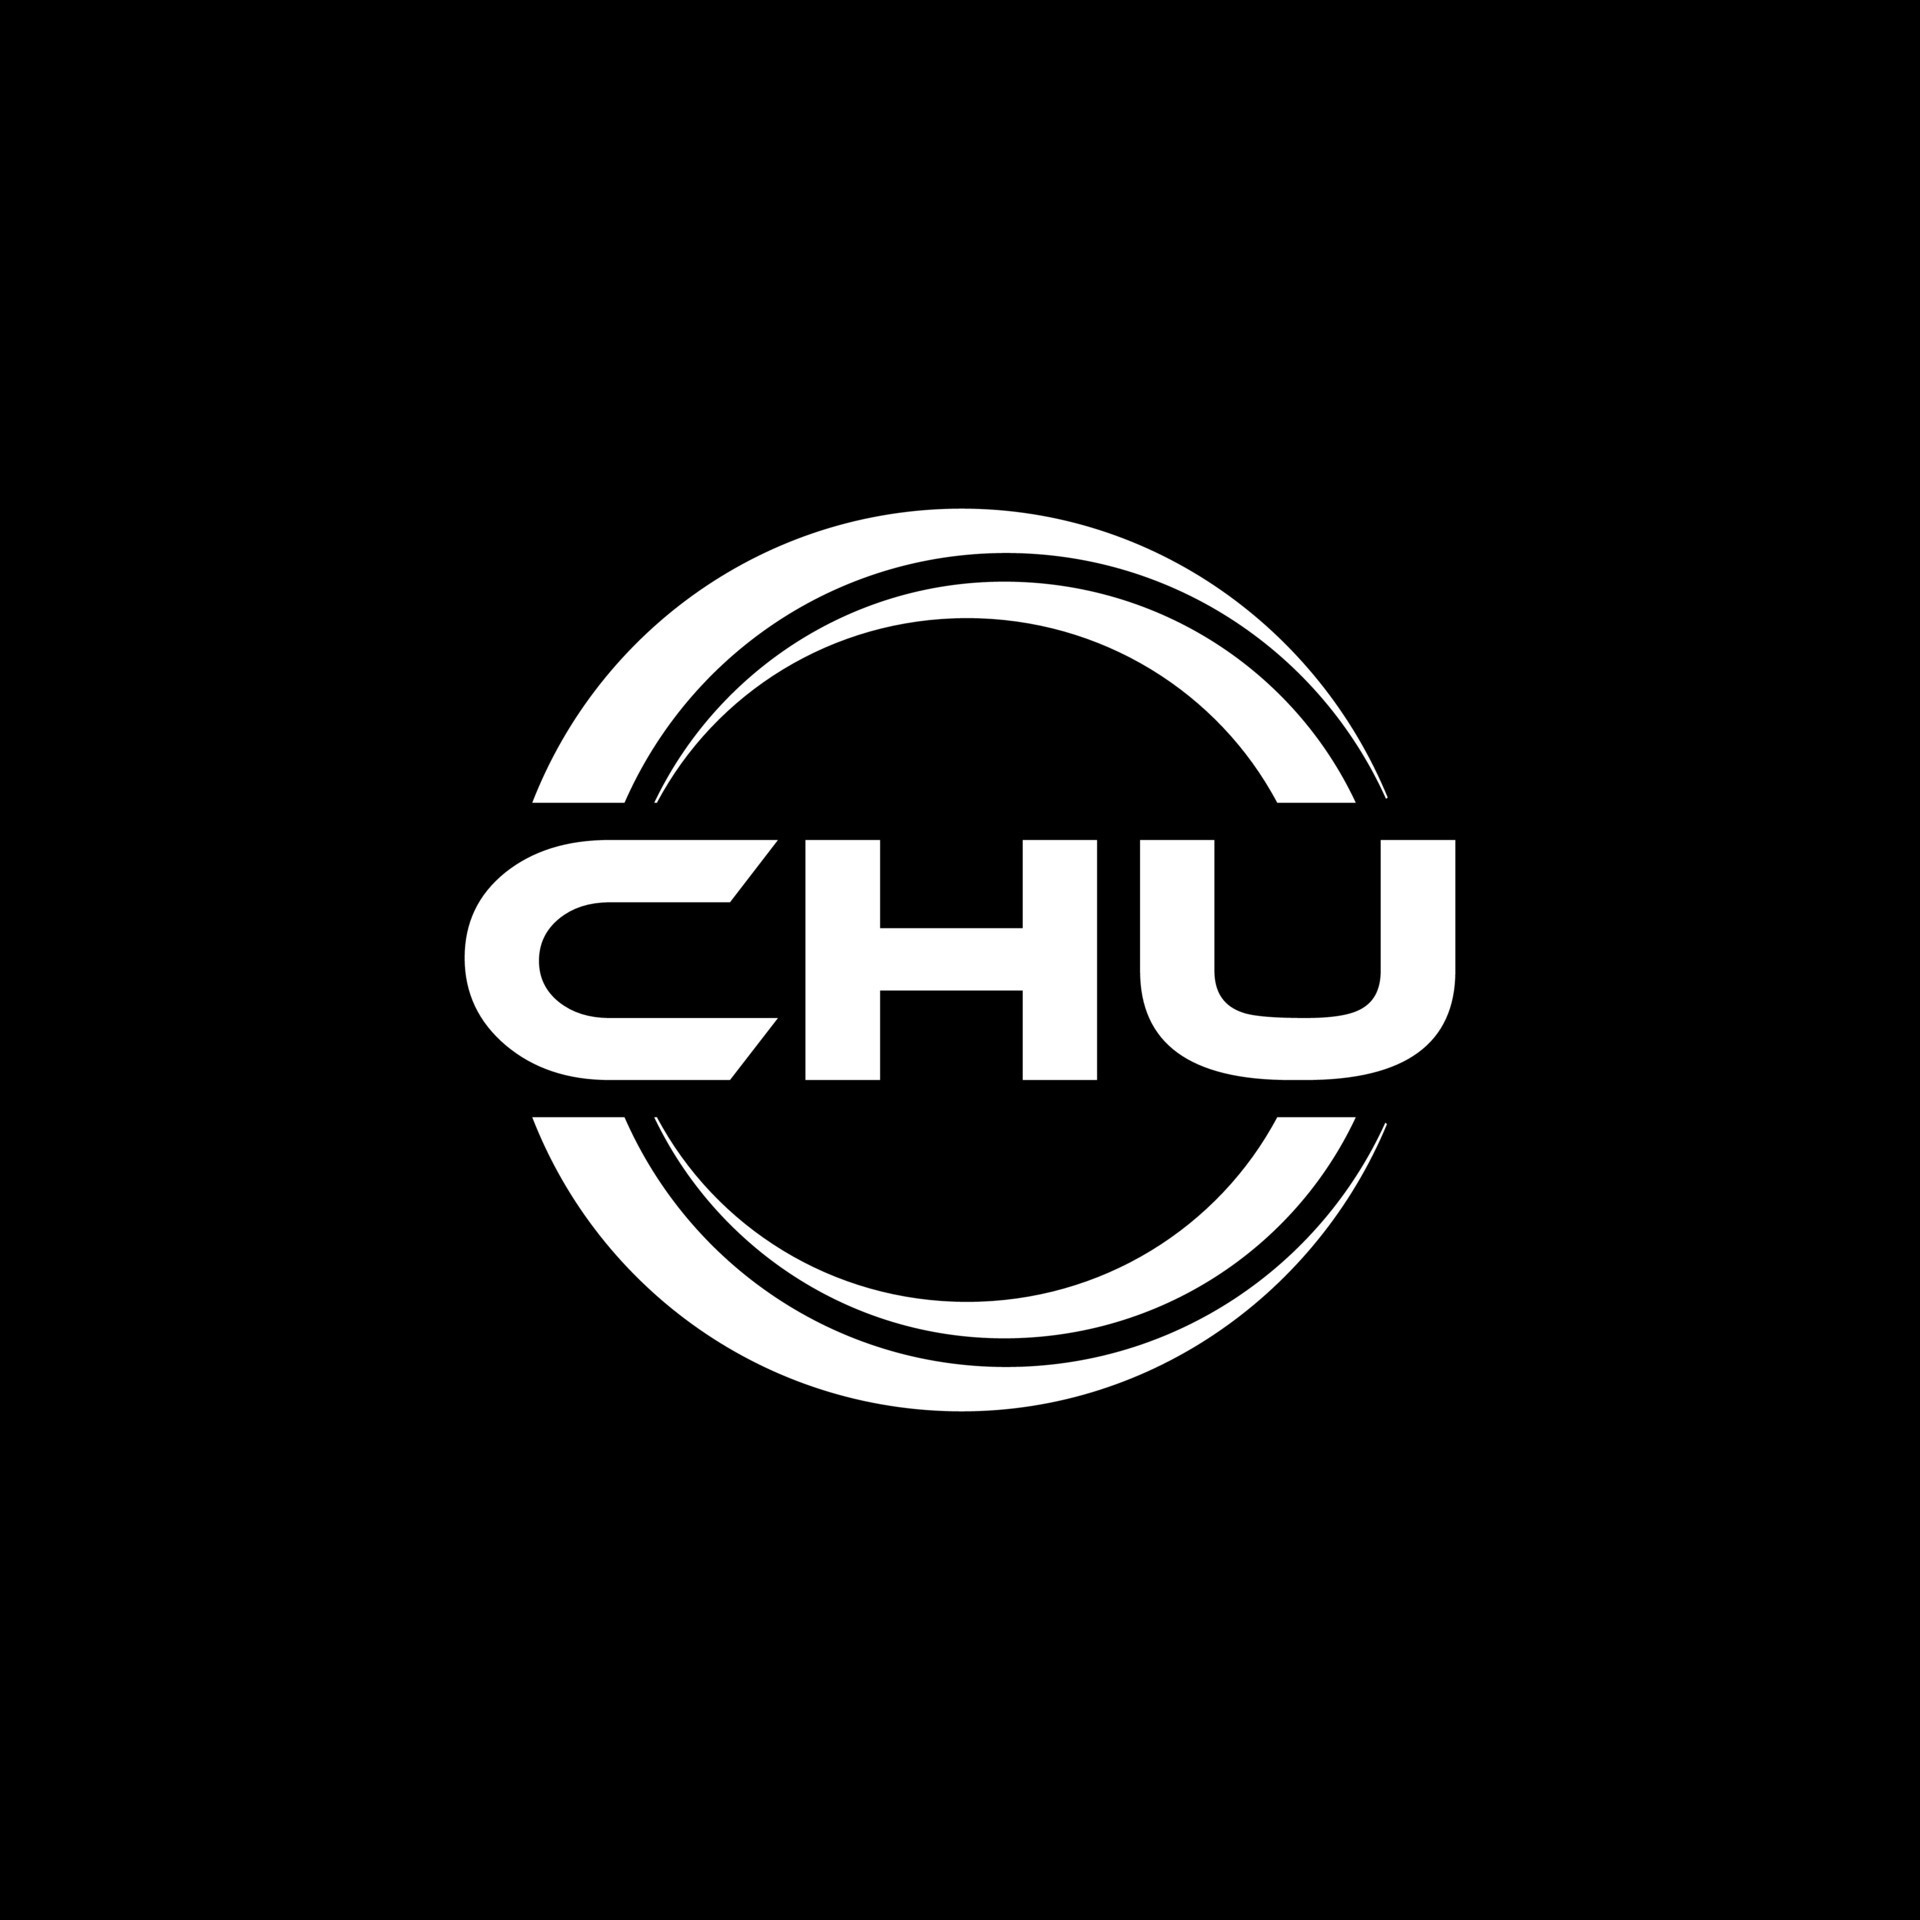 CHU Logo Design, Inspiration for a Unique Identity. Modern Elegance and ...